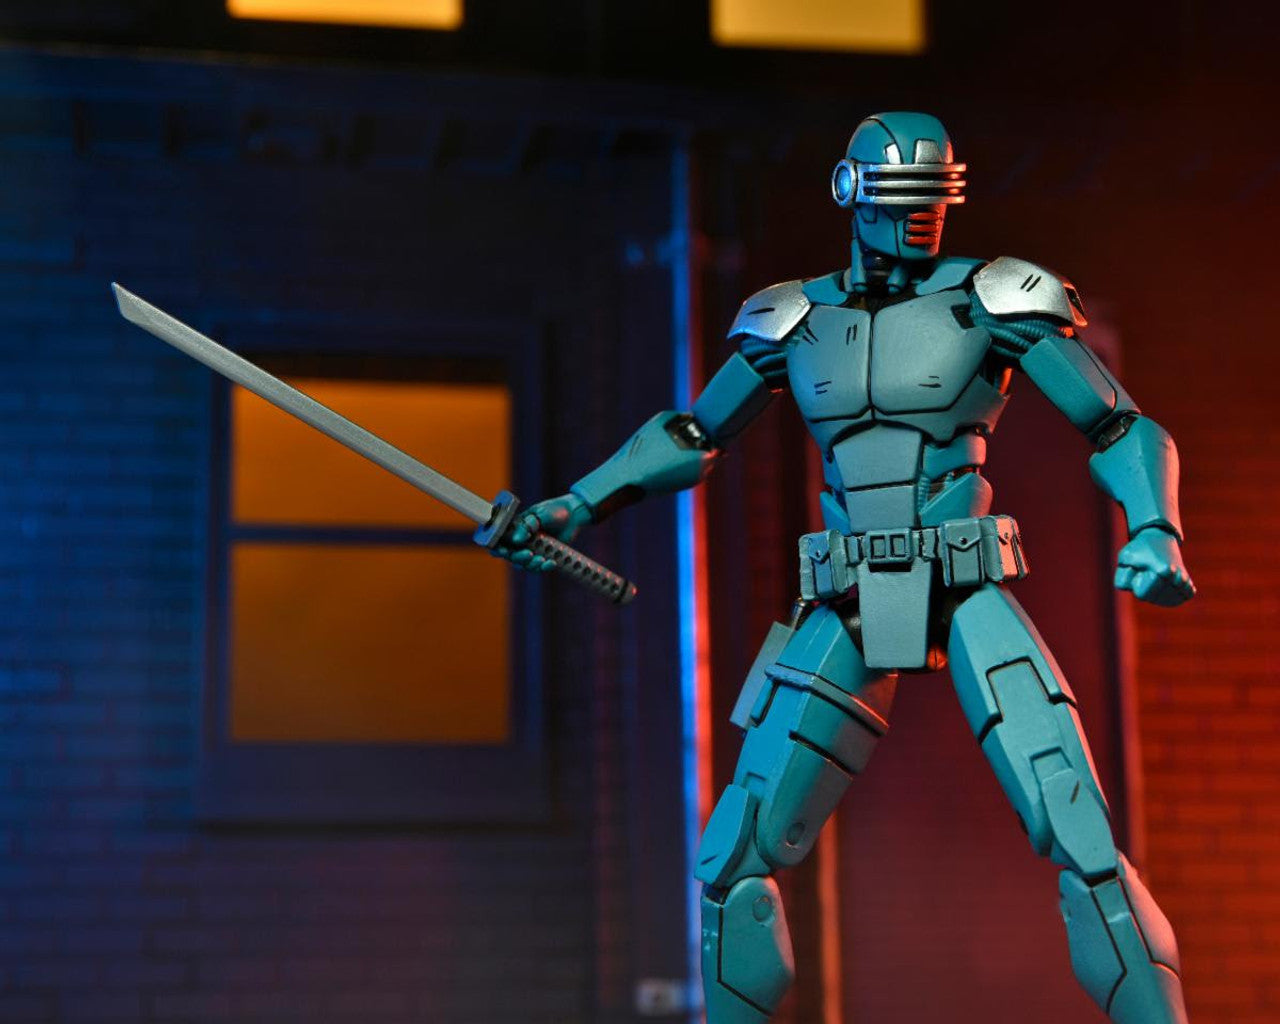 Teenage Mutant Ninja Turtles (The Last Ronin): Ultimate Synja Patrol Bot - 7 inch Scale Action Figure